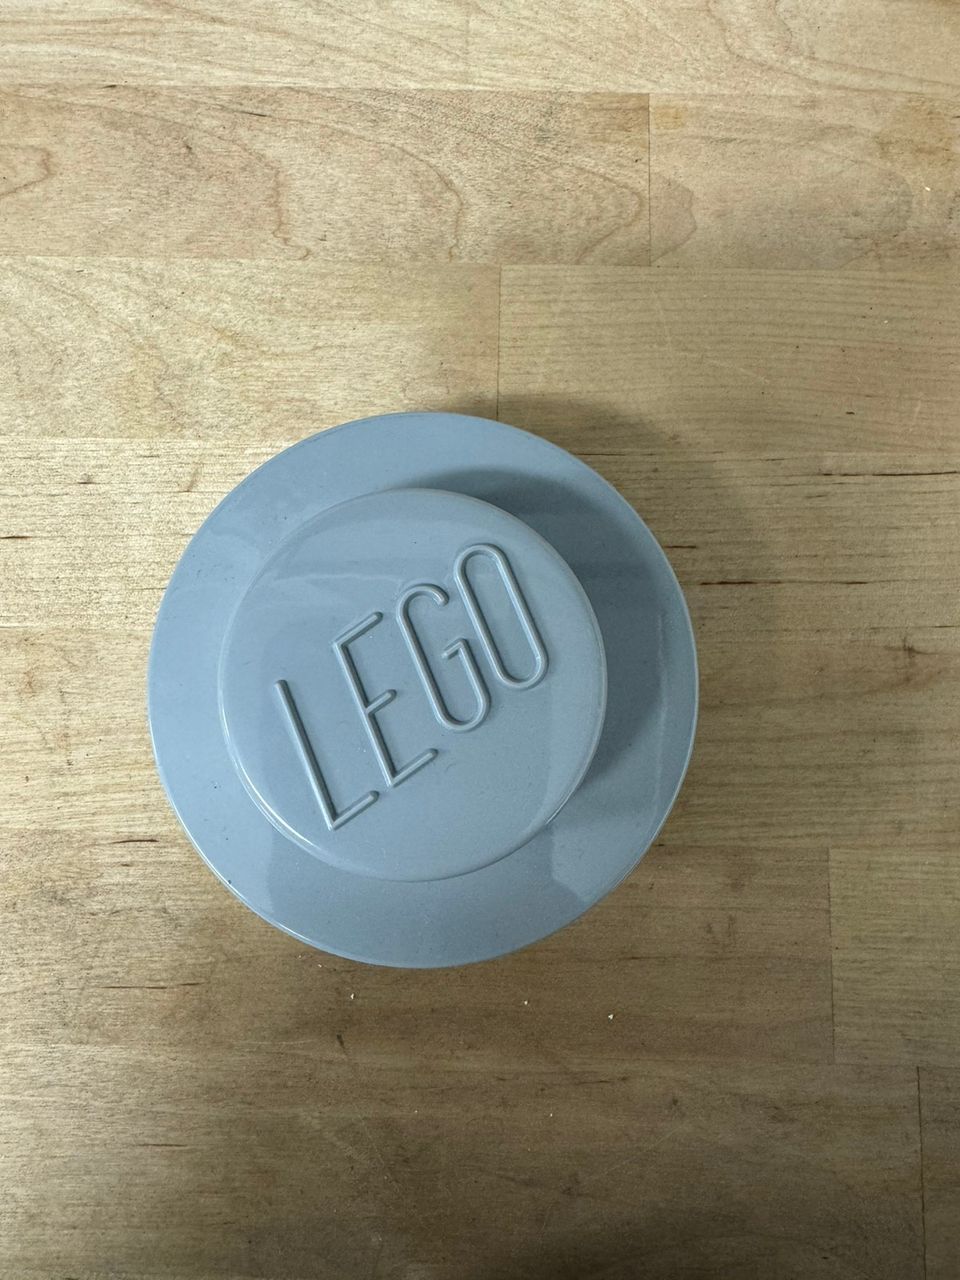 Lego koukku